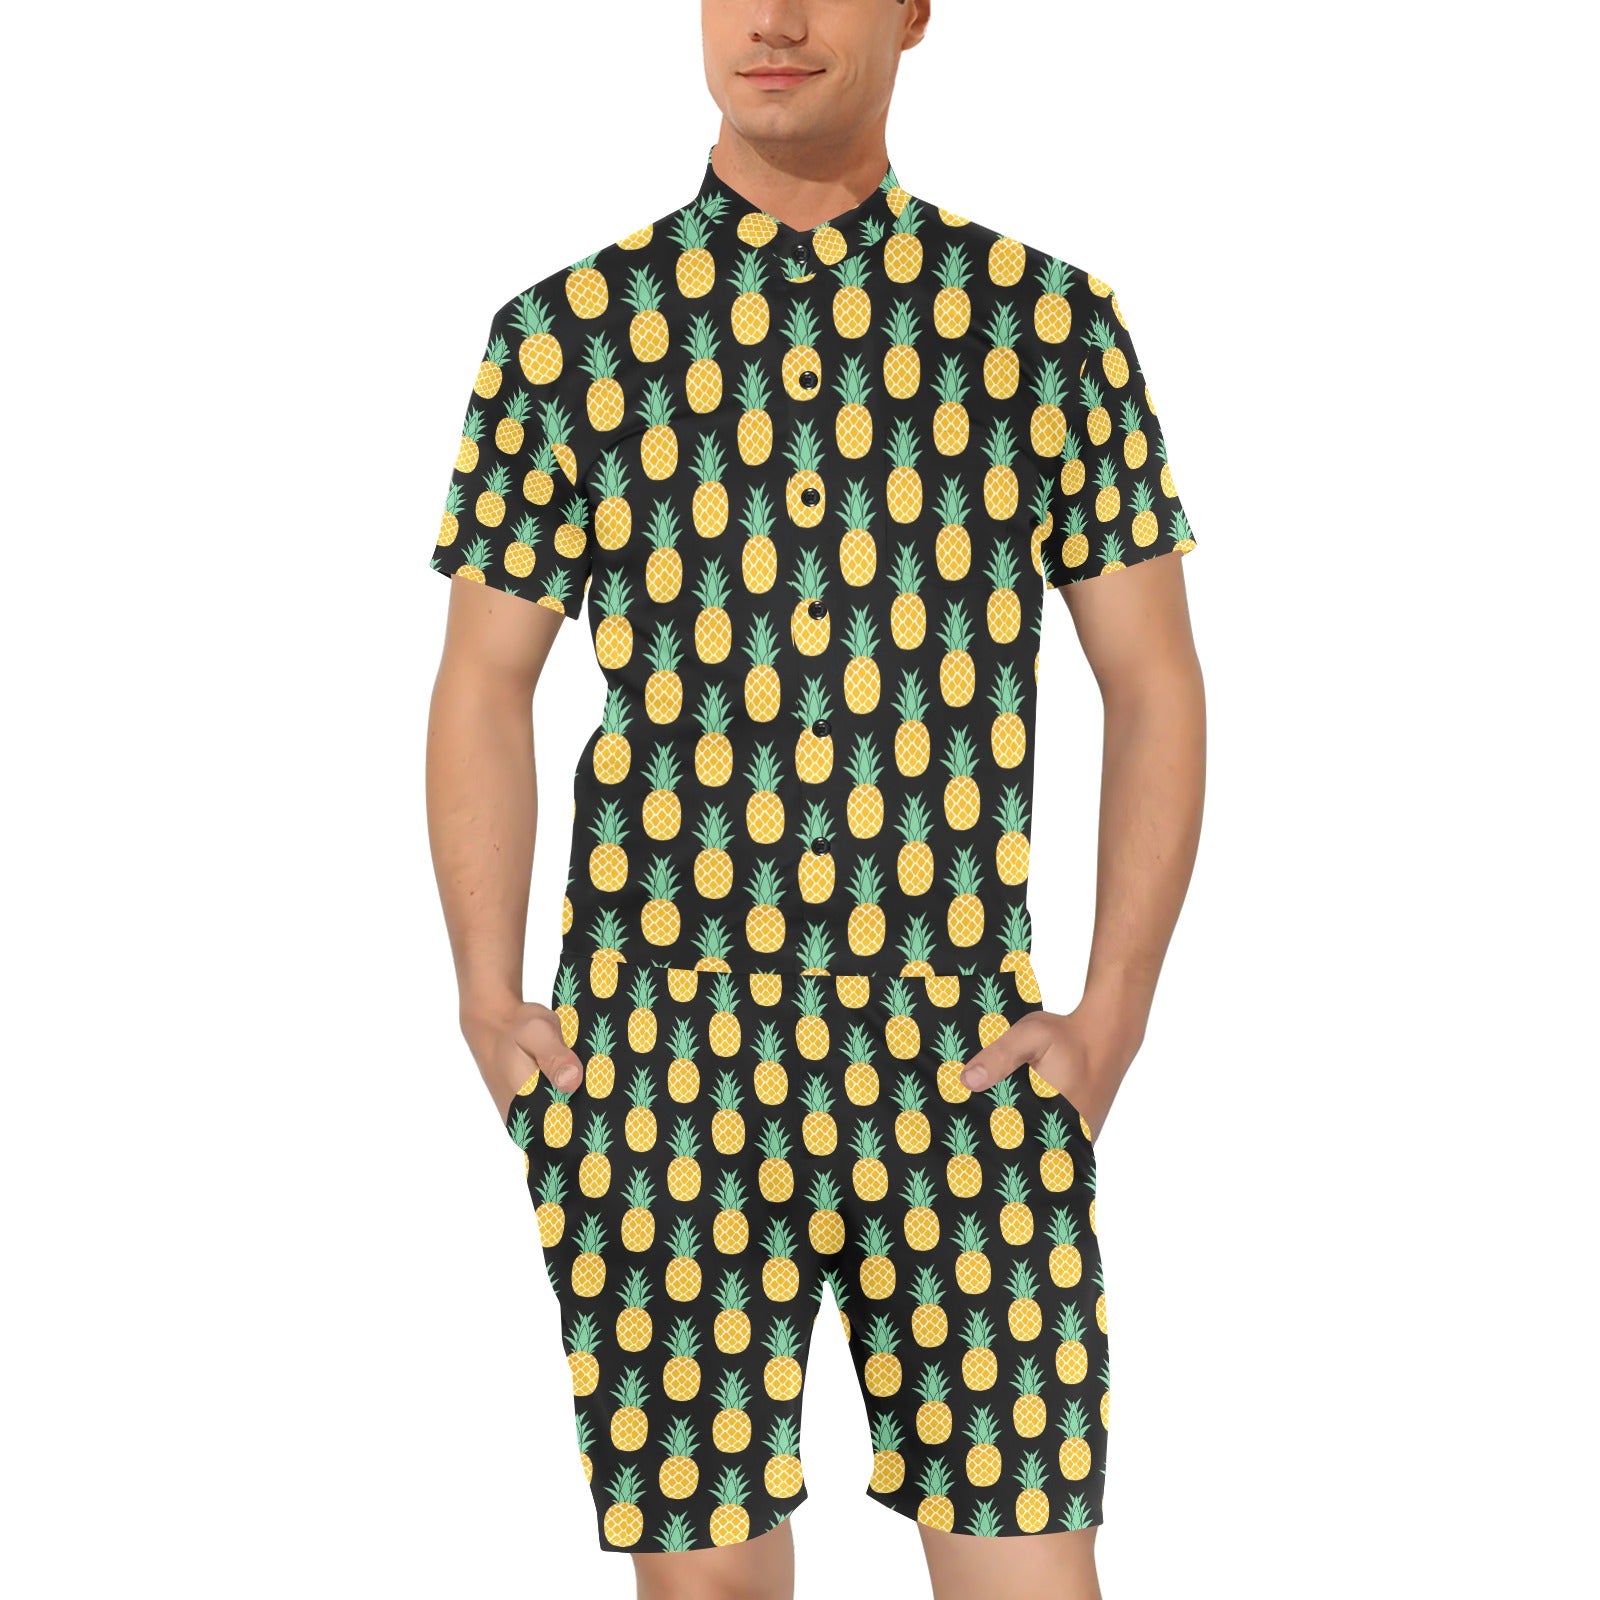 Pineapple Pattern Print Design A03 Men's Romper